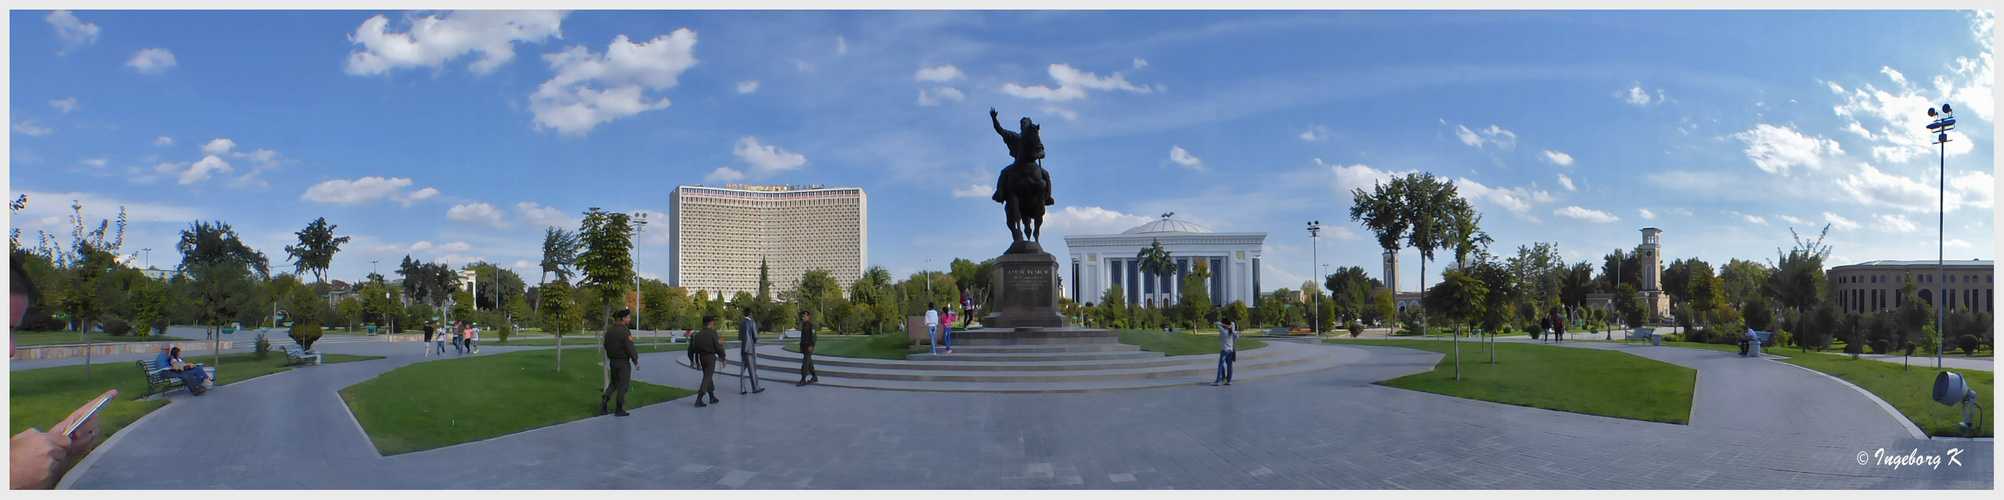 Taschkent - Platz des Amir Timur Lenk - Tamerlan -